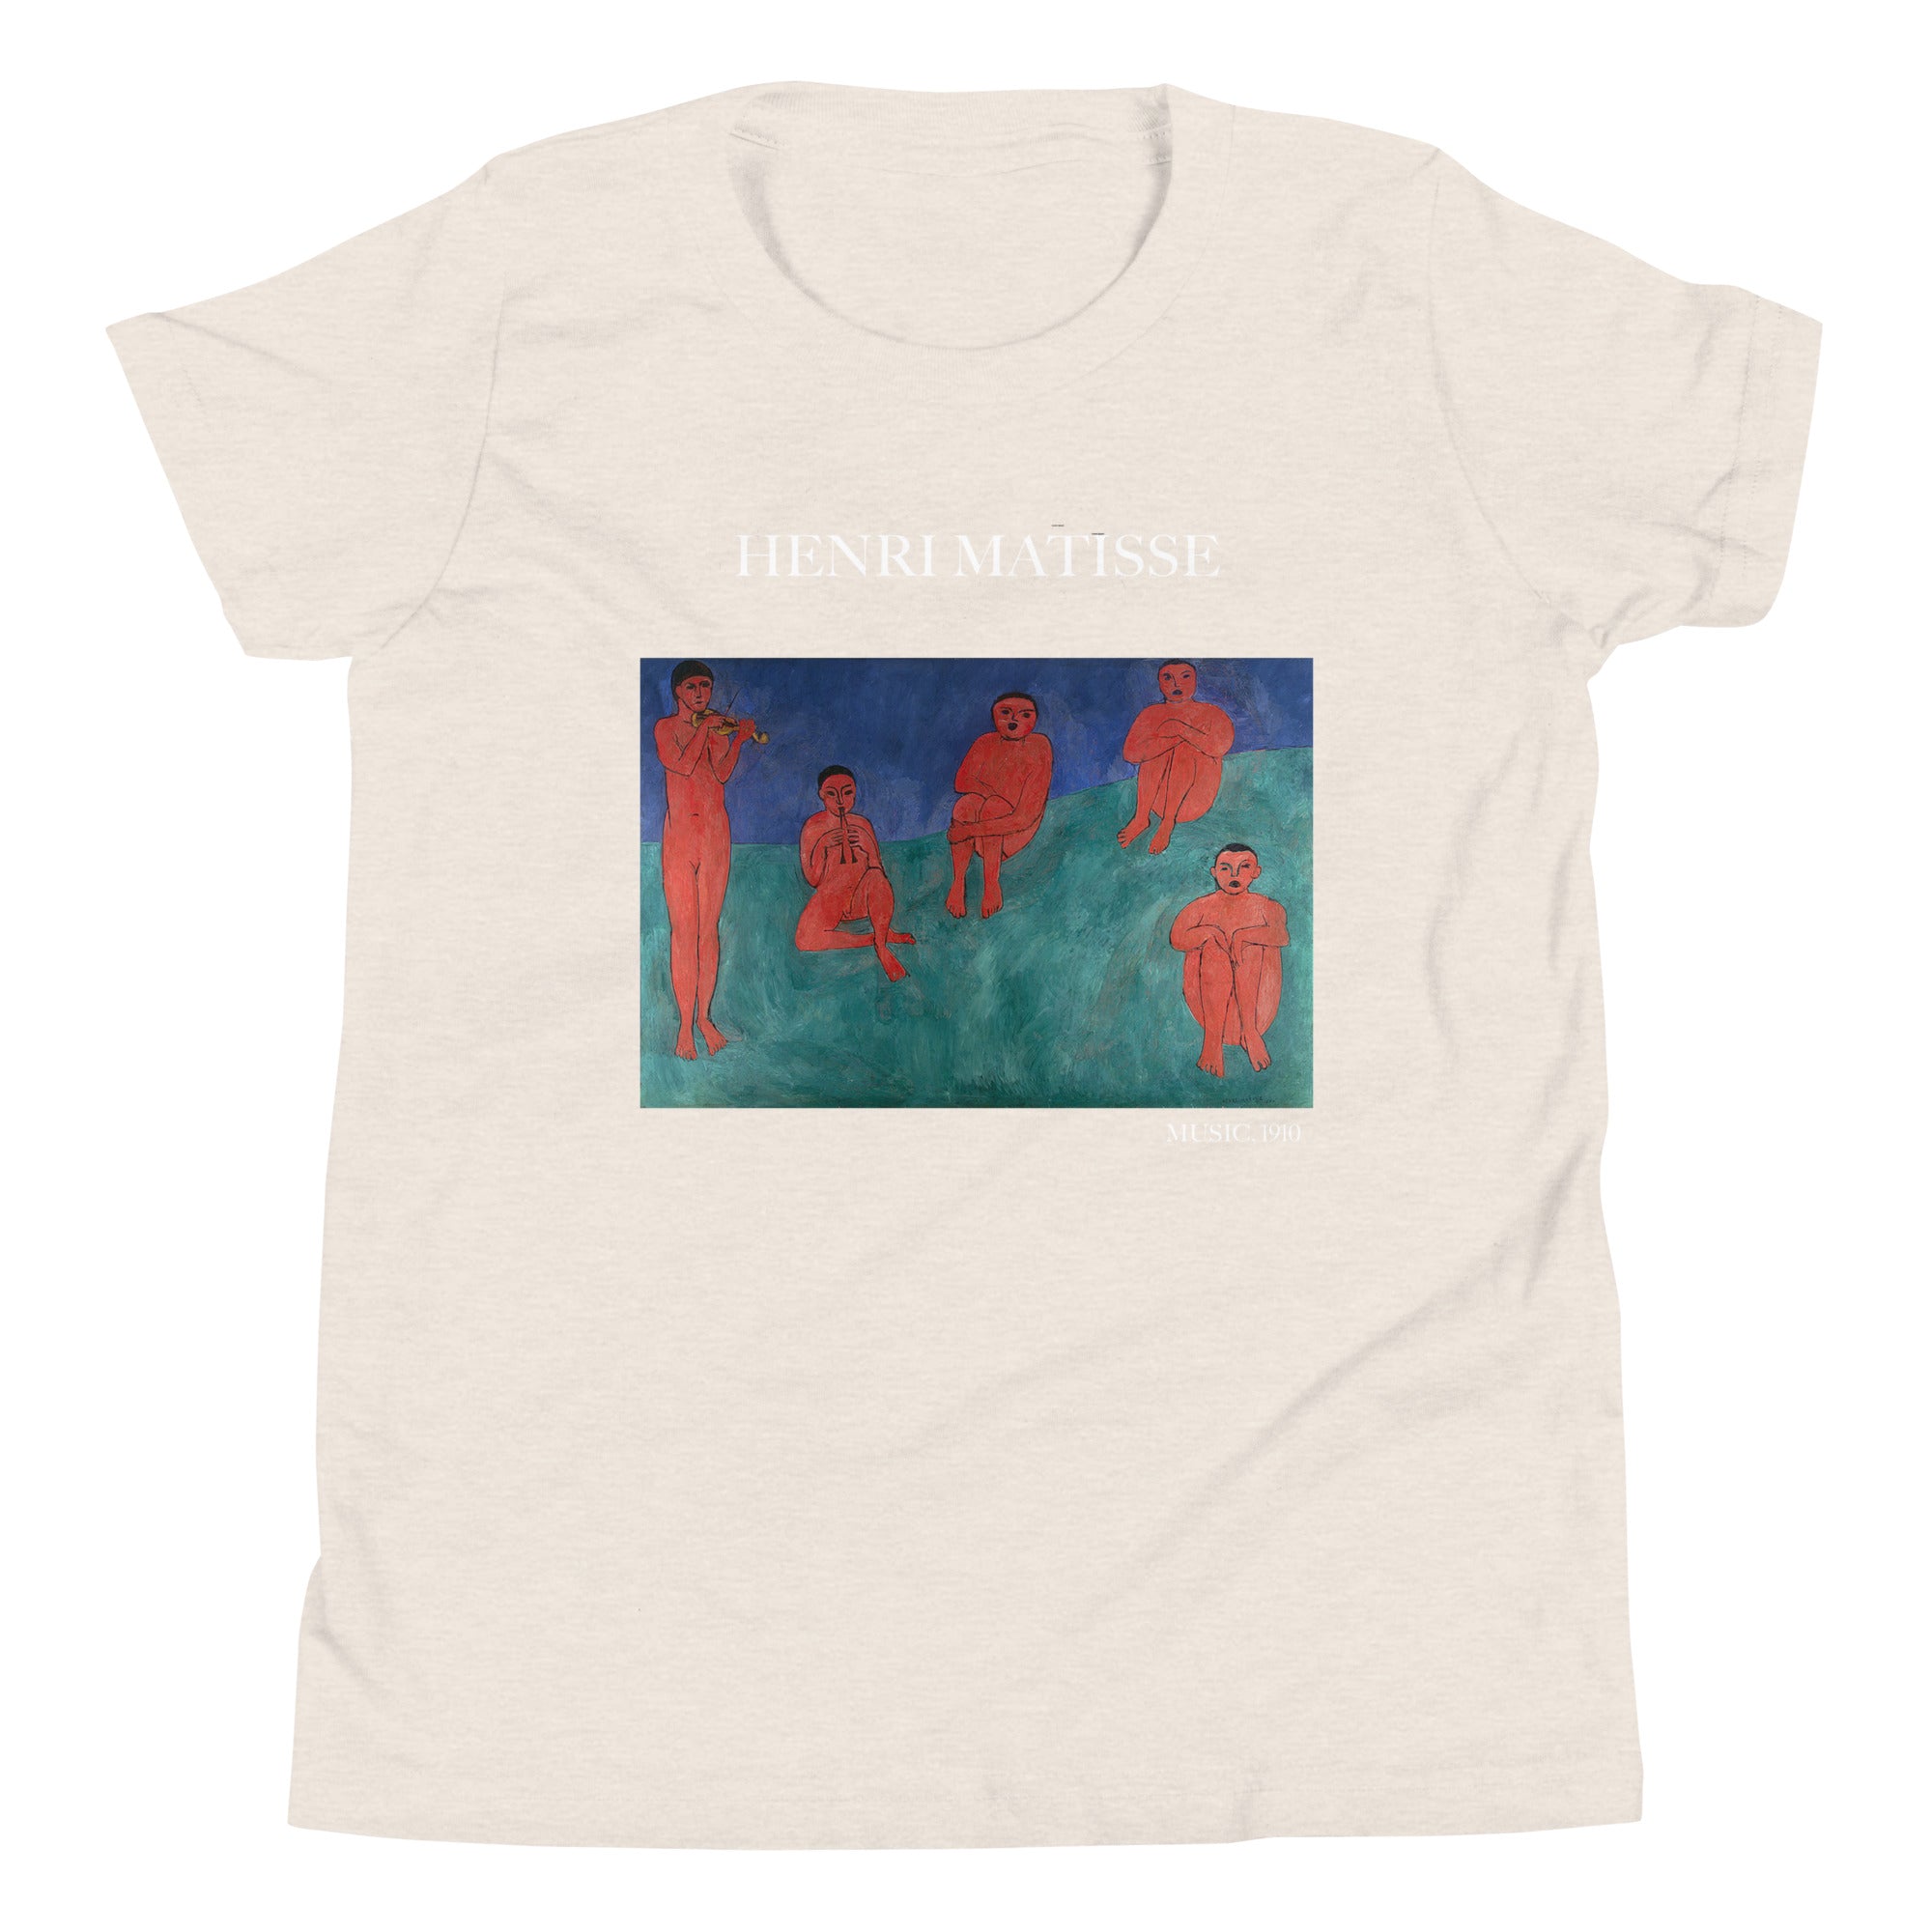 Henri Matisse 'Music' Famous Painting Short Sleeve T-Shirt | Premium Youth Art Tee